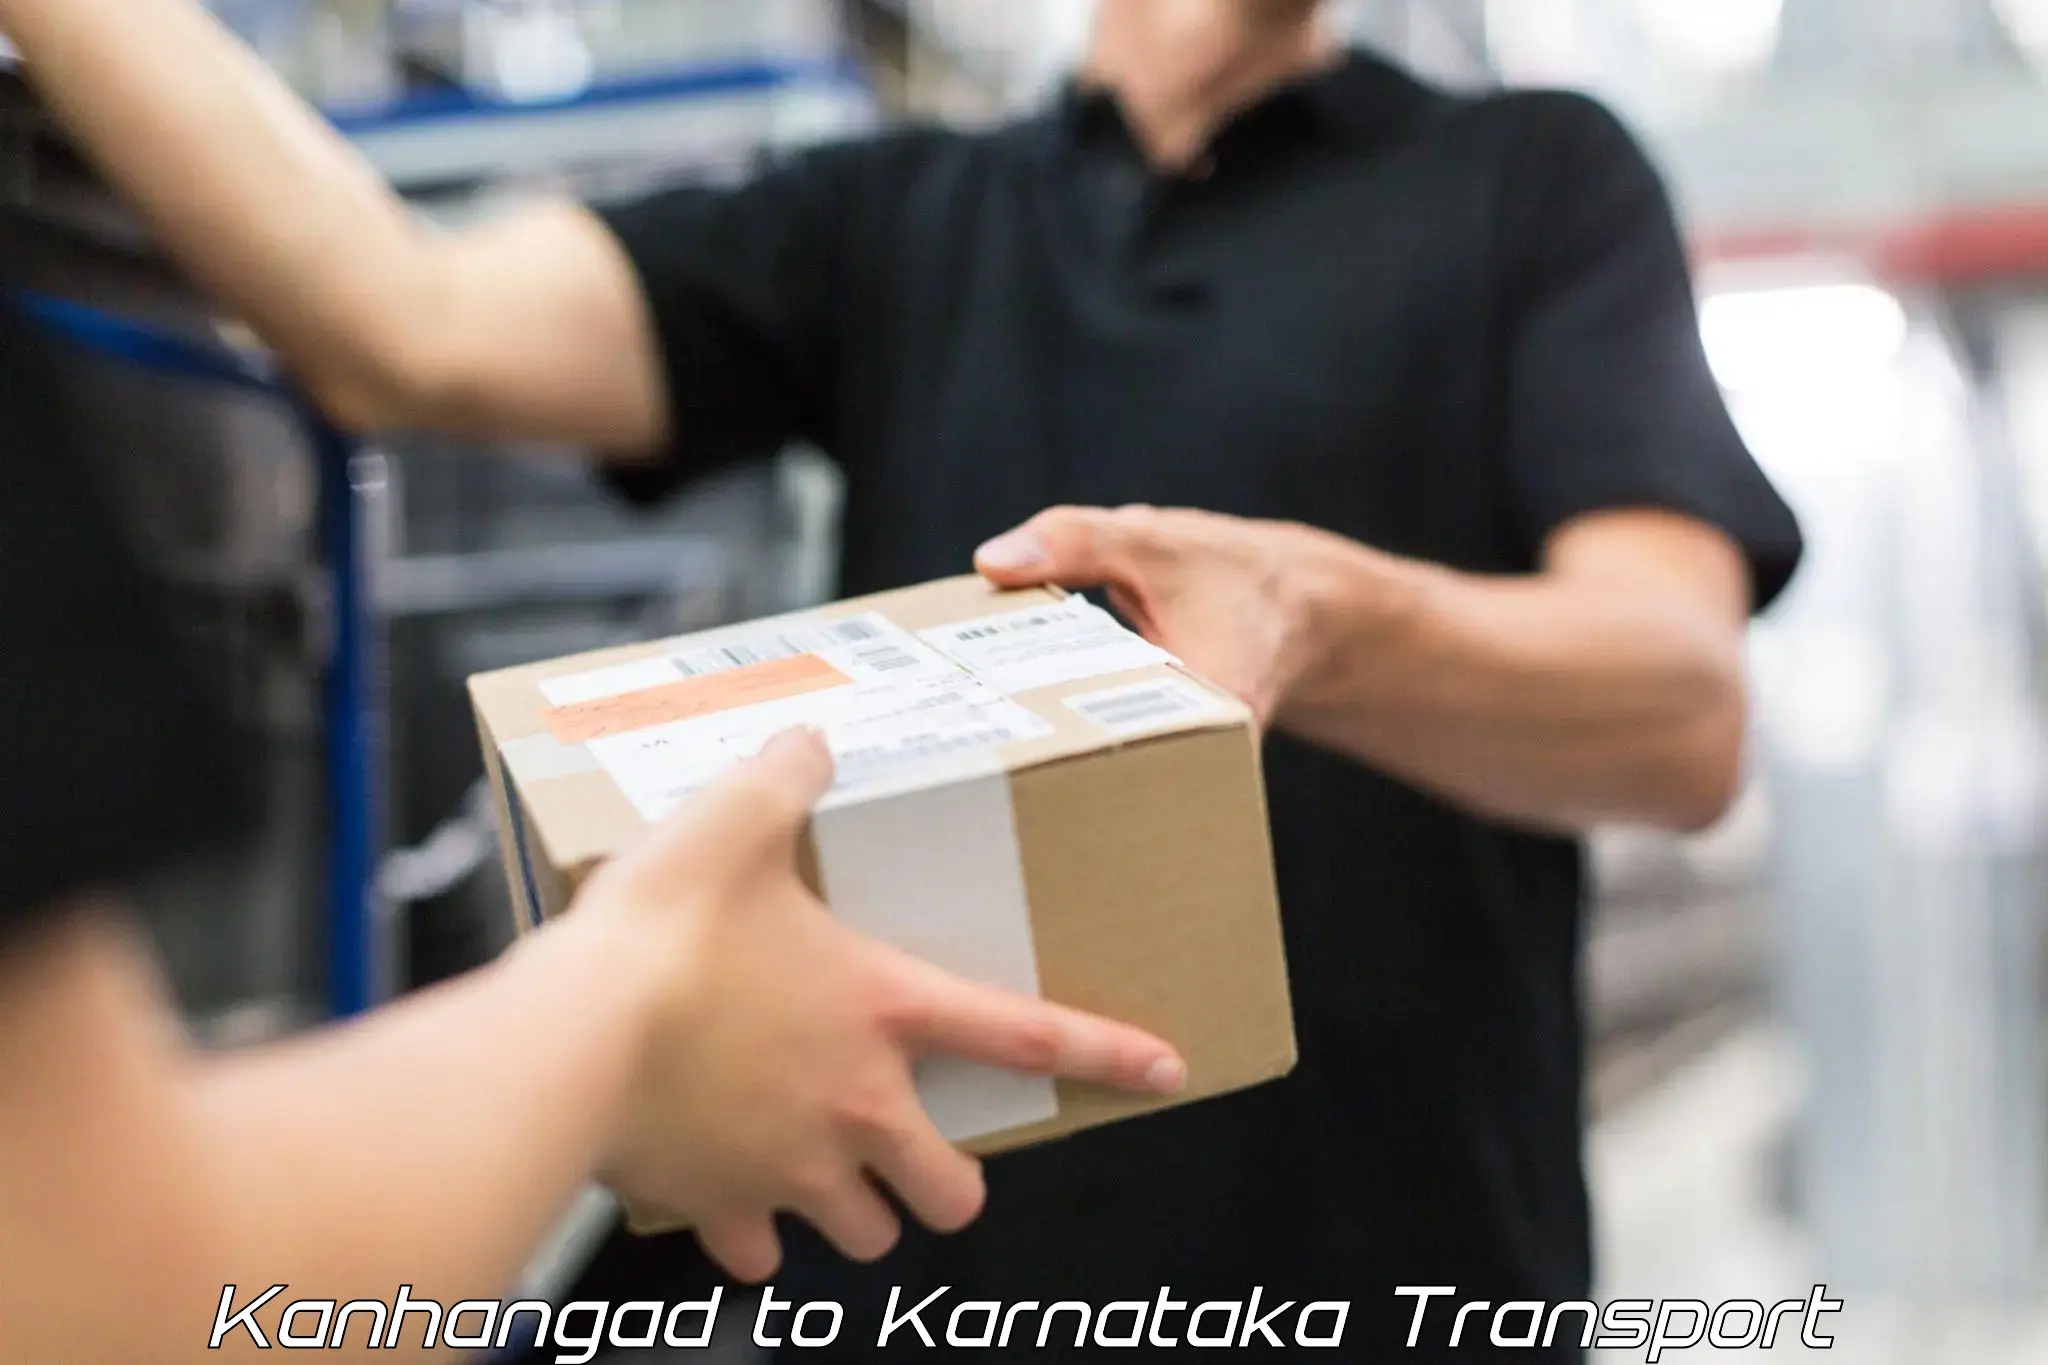 Delivery service Kanhangad to Hiriyur